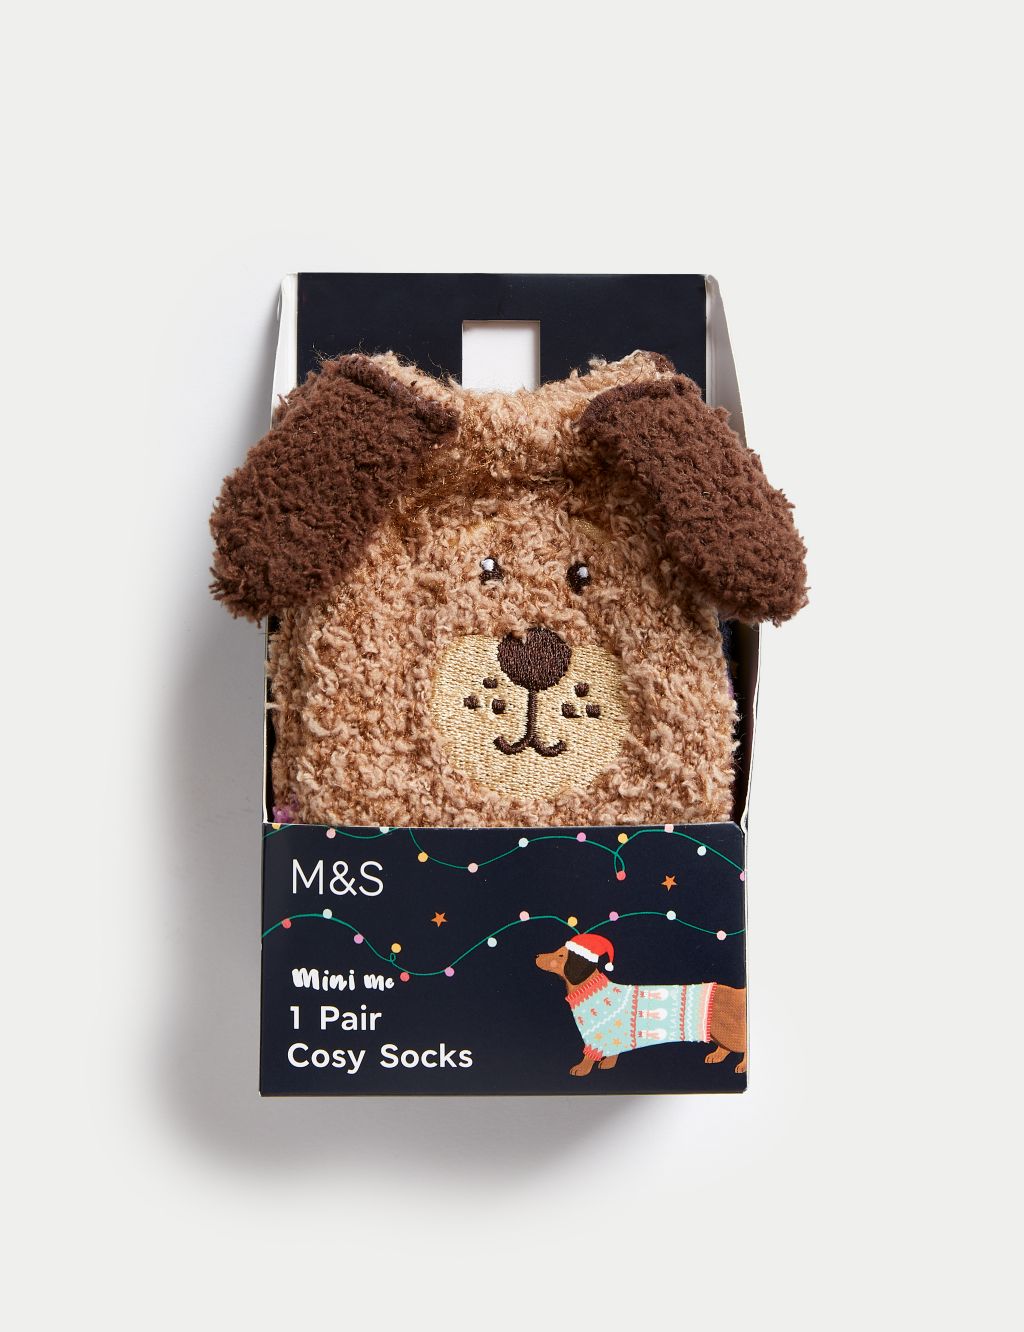 Cosy Dog Slipper Socks Gift Box